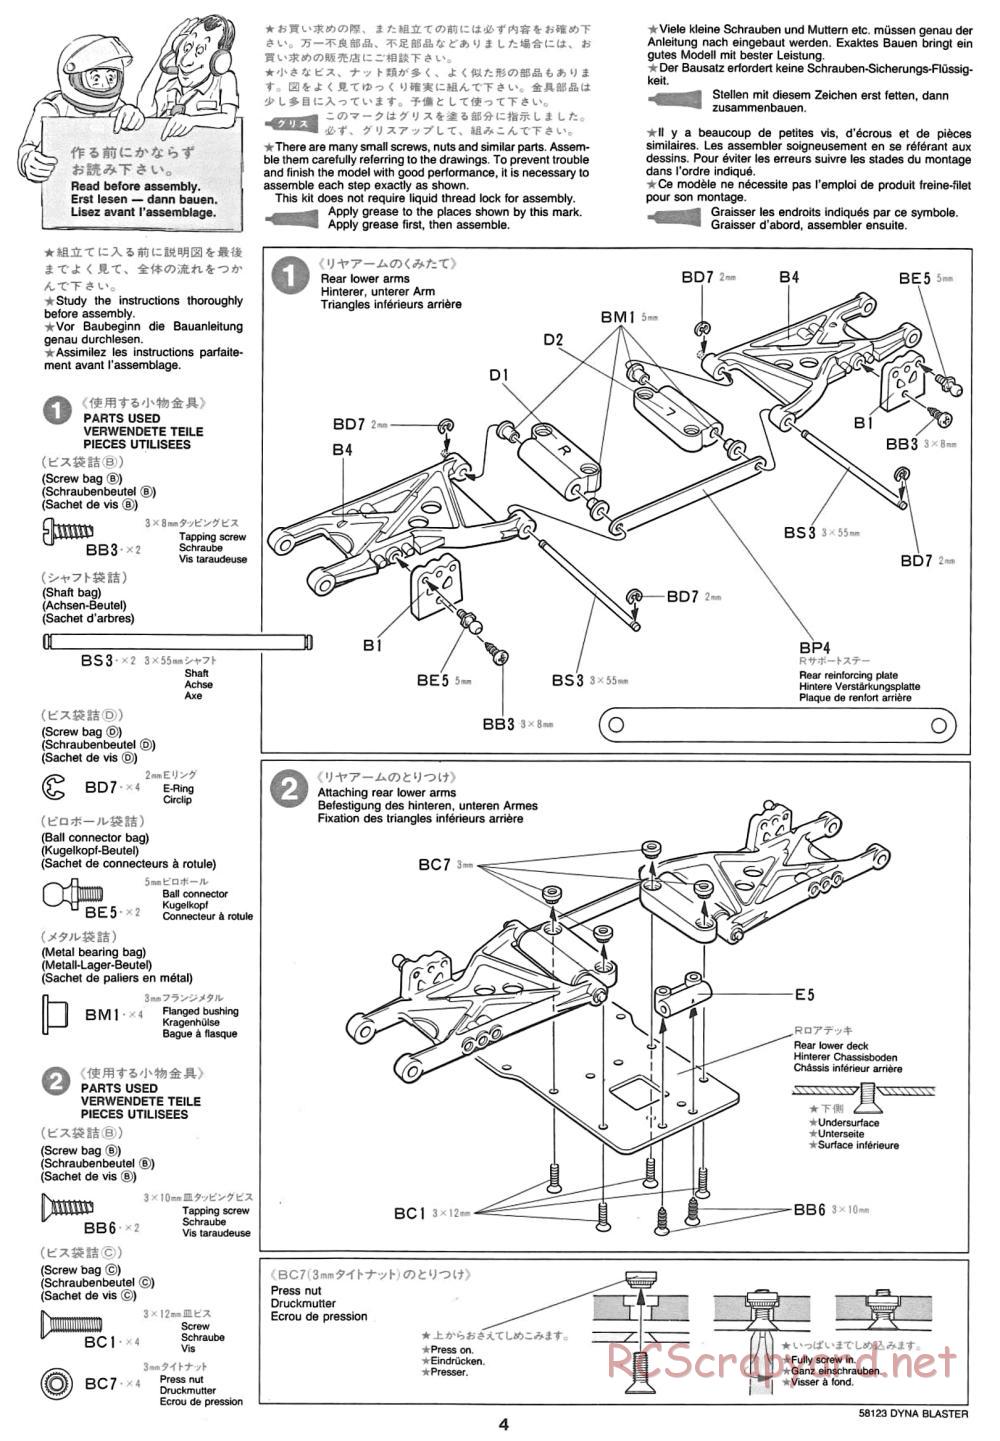 Tamiya - Dyna Blaster Chassis - Manual - Page 4